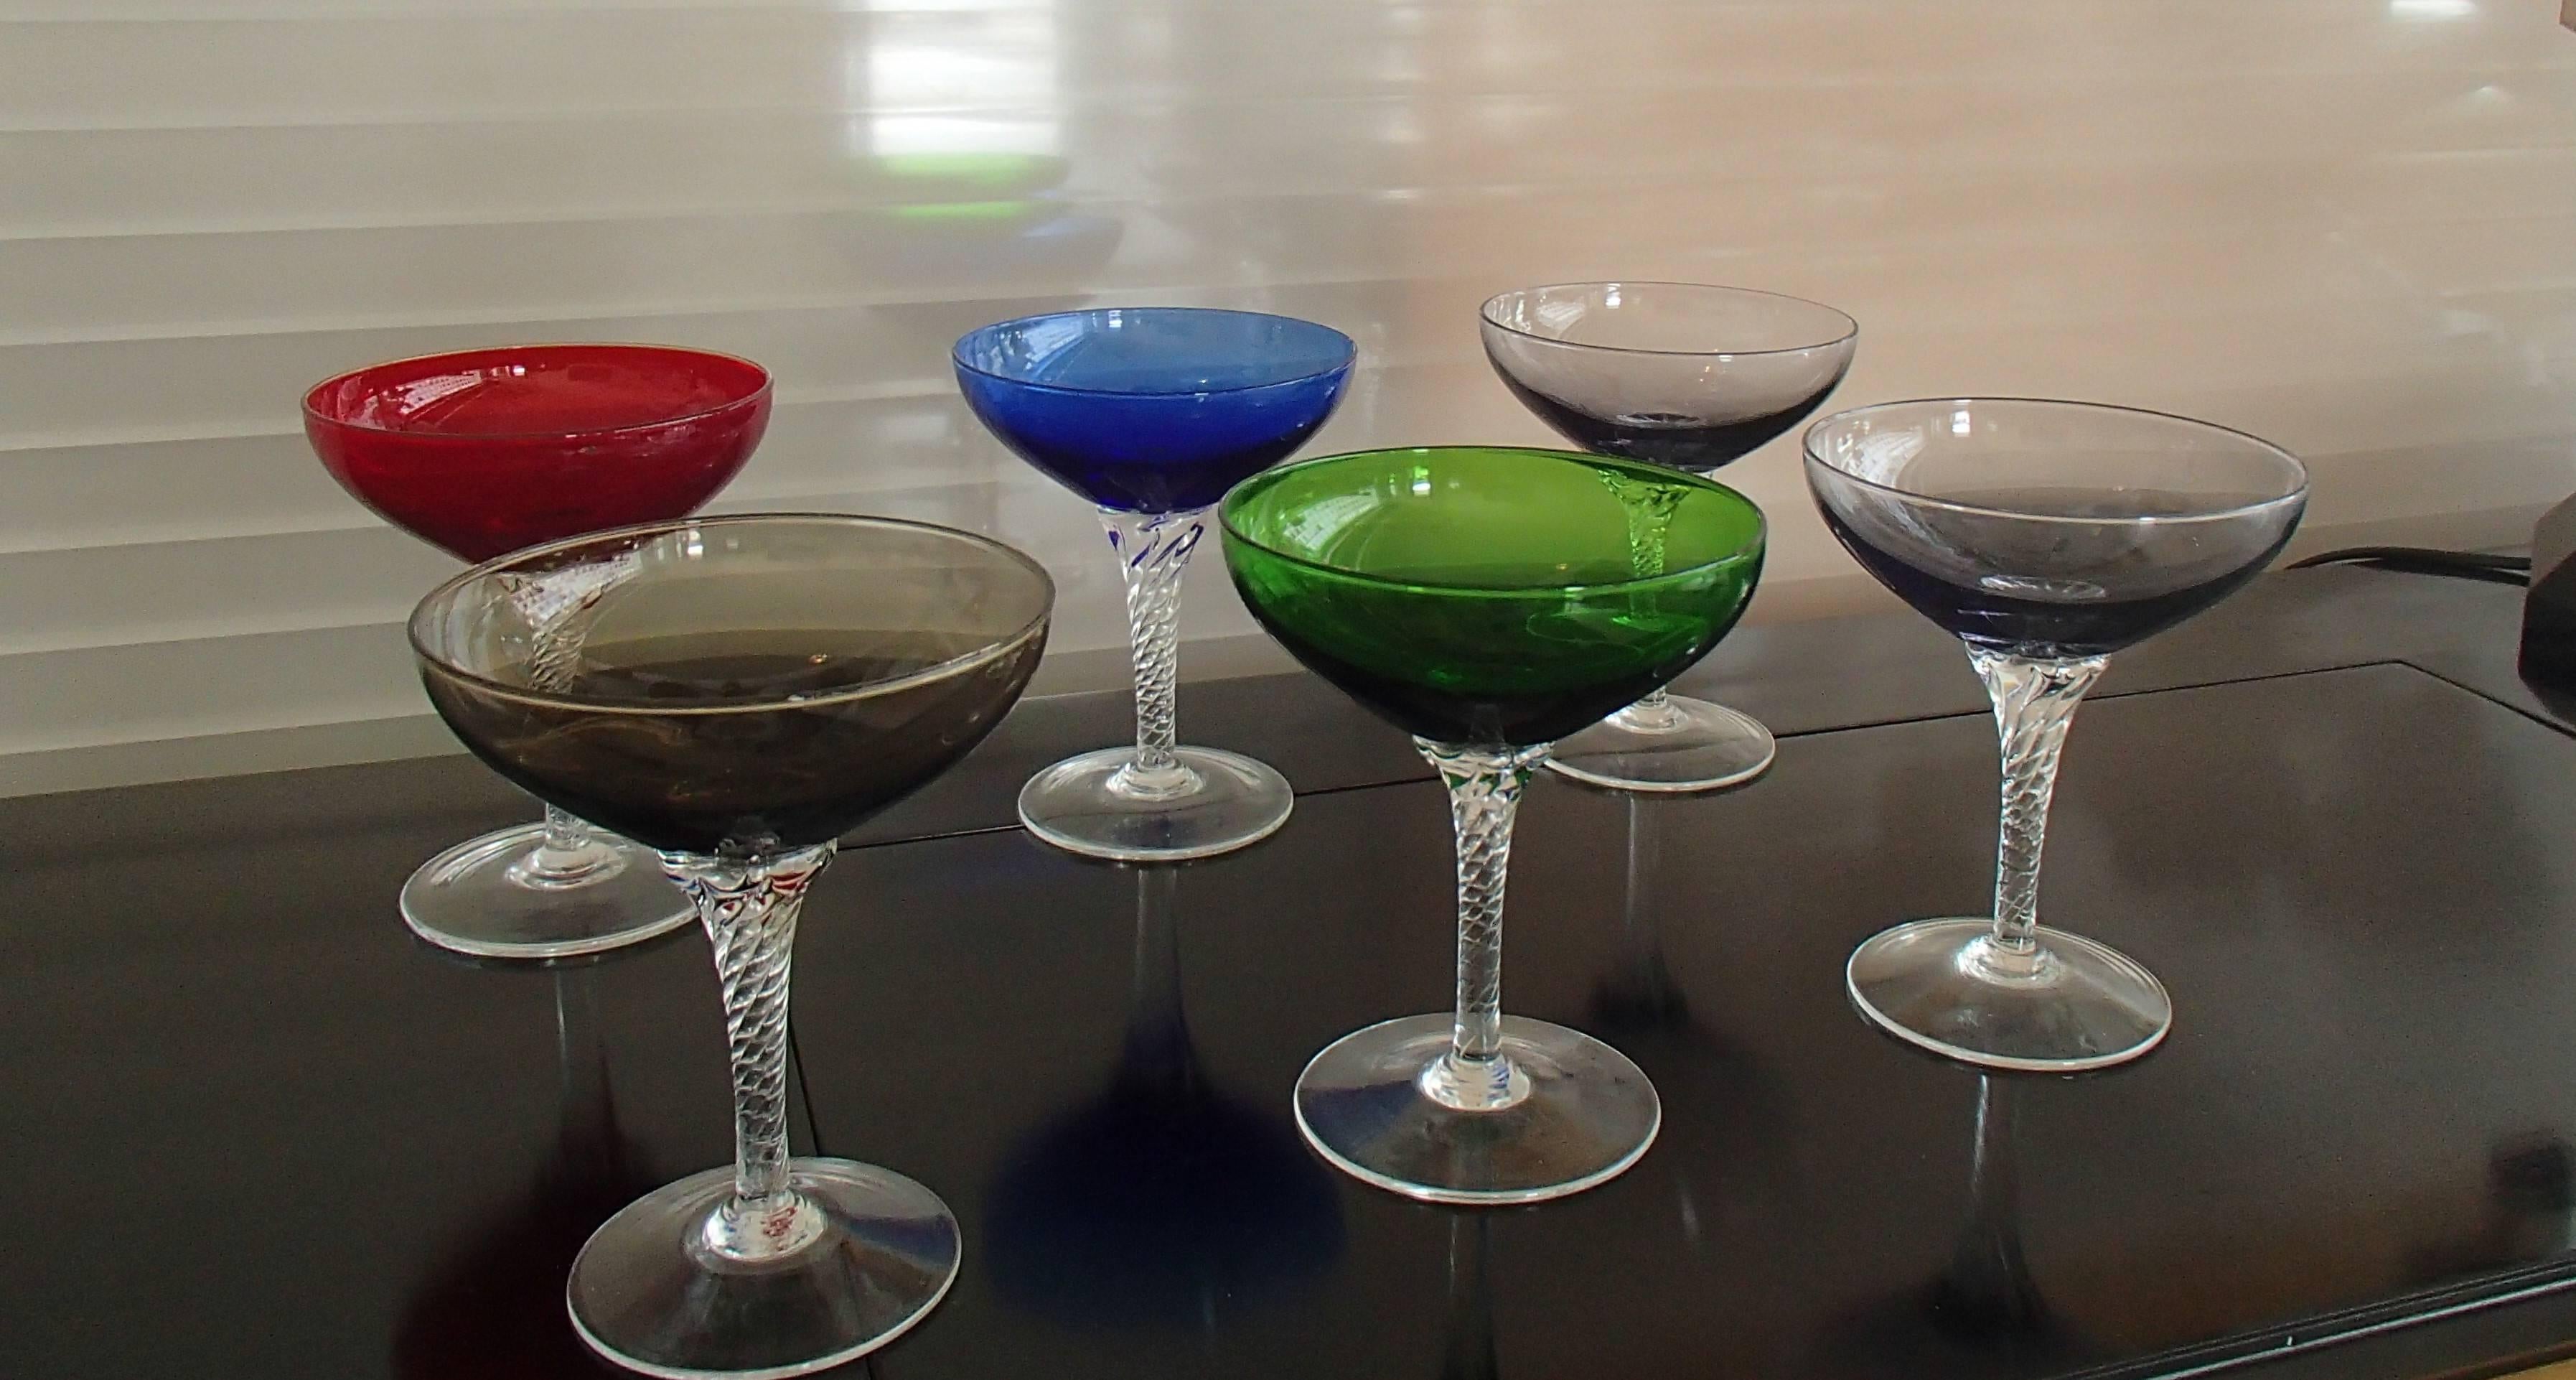 Sechs bunte Murano-Champagnerbecher auf gedrehtem Sockel.
Rot/Grün/Blau/Klar Braun/Klar Grau/Klar Lila.